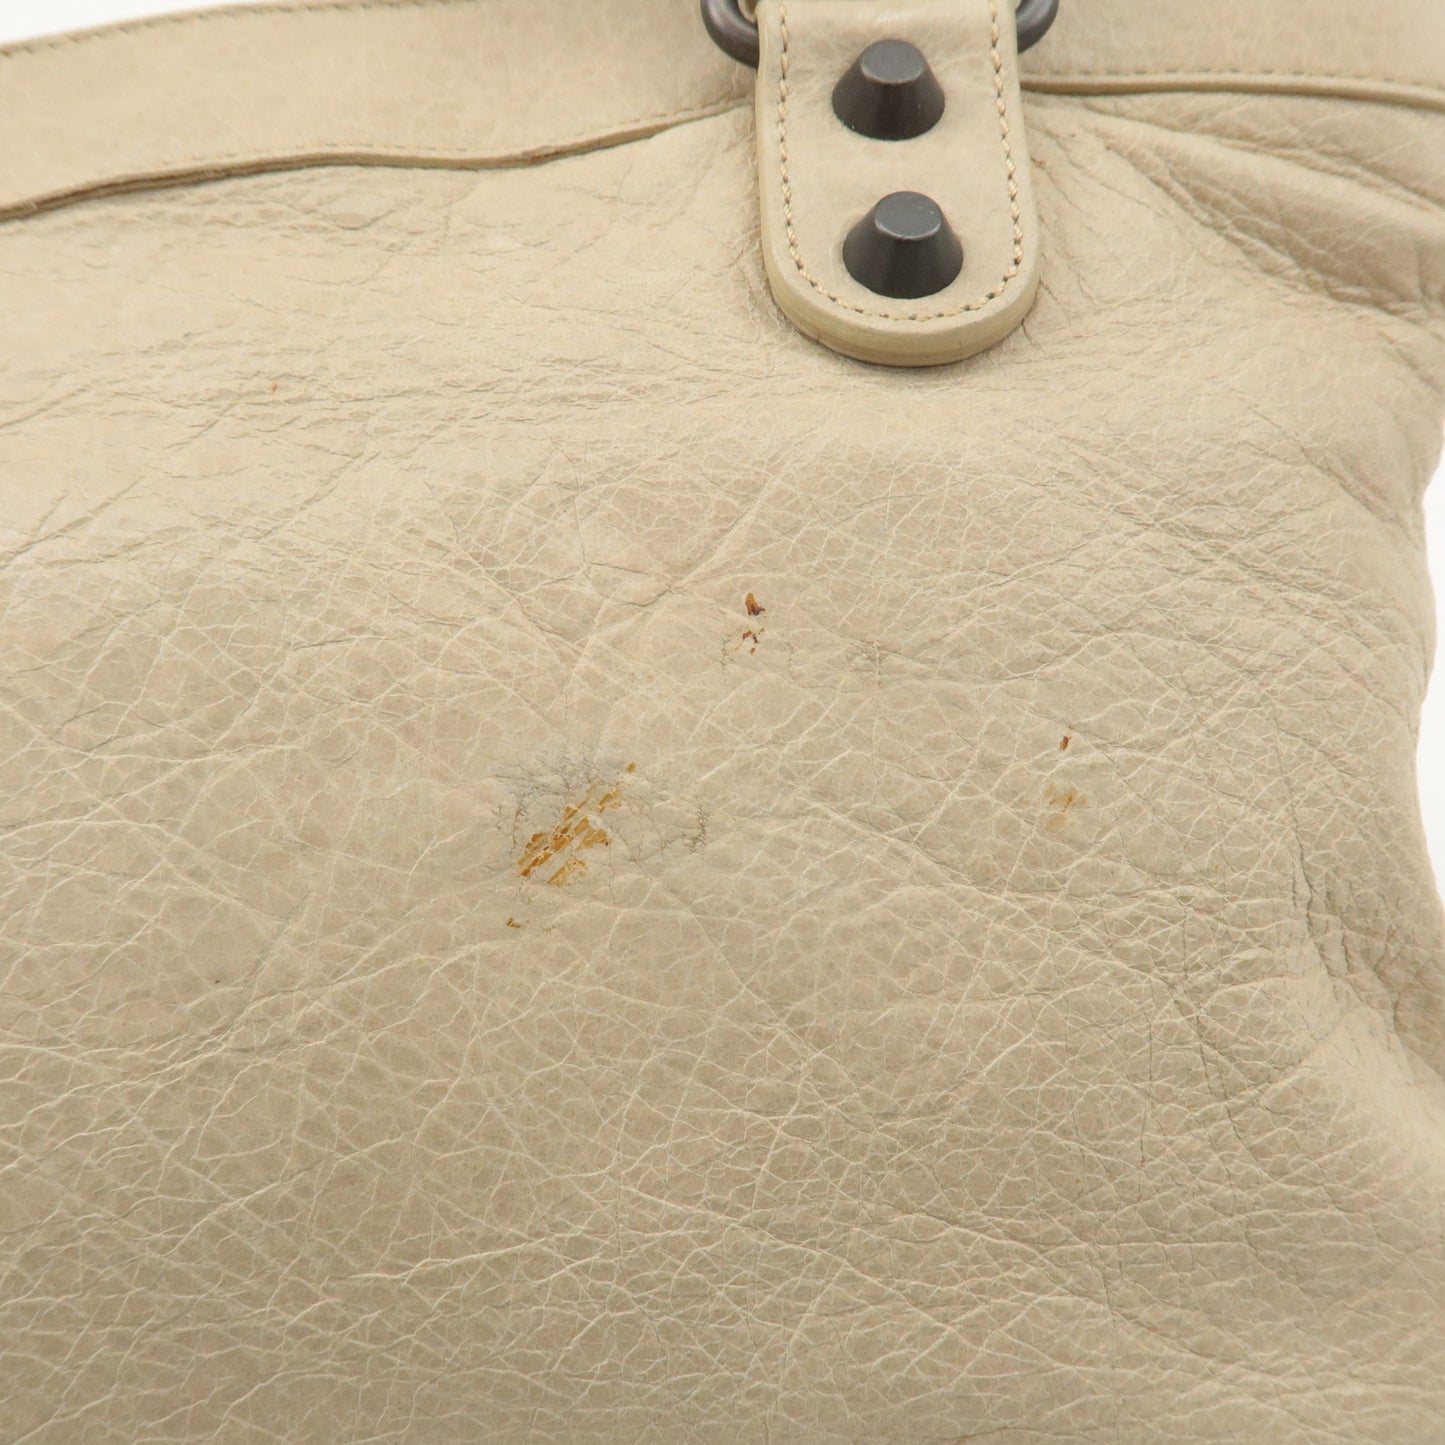 BALENCIAGA The First Leather 2Way Bag Hand Bag Ivory 103208